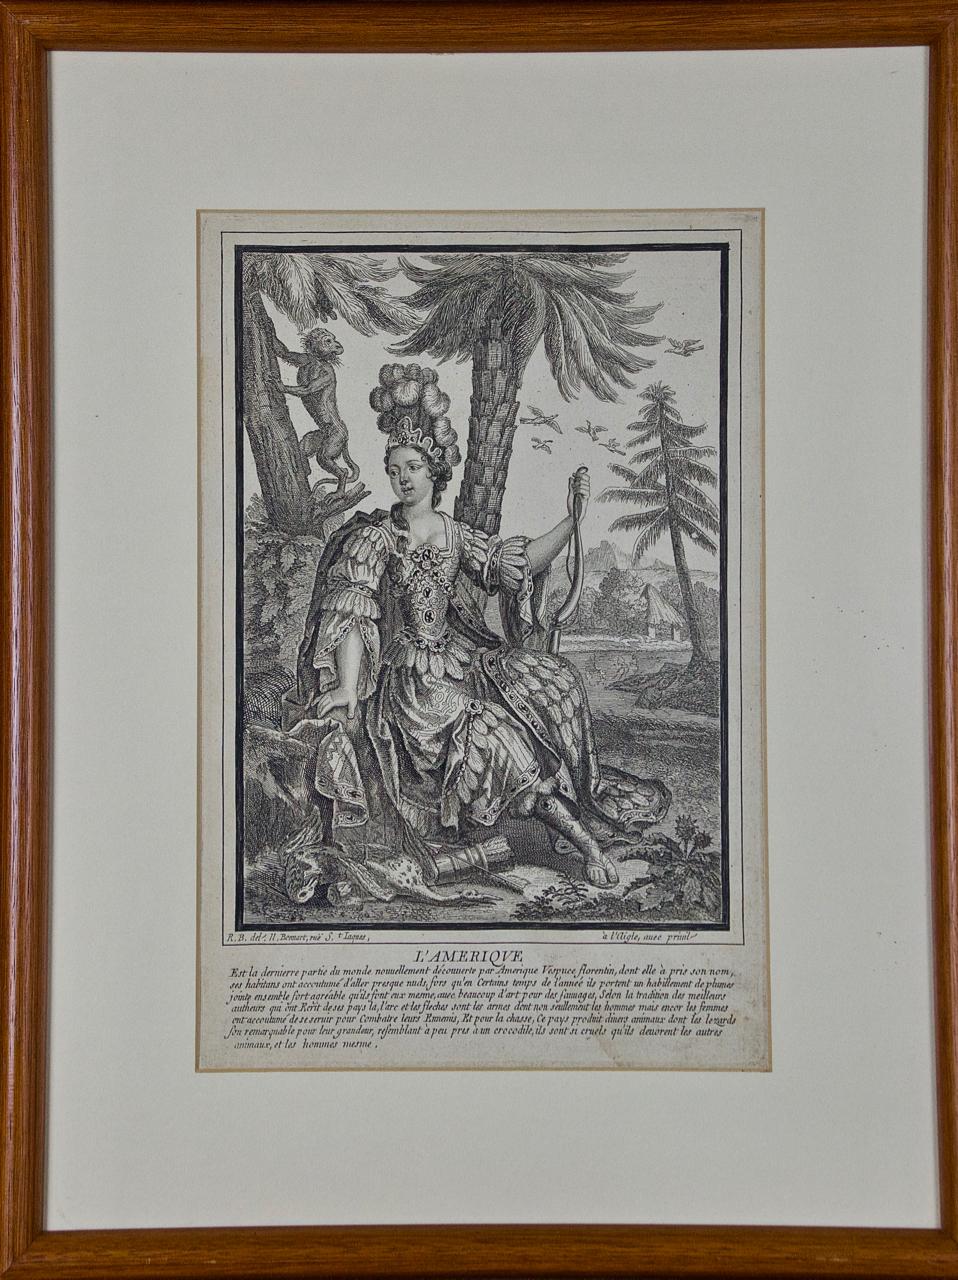 Robert Bonnart Print - "L' Amerique" an Early 18th Century Allegorical Engraving of America by Bonnart 